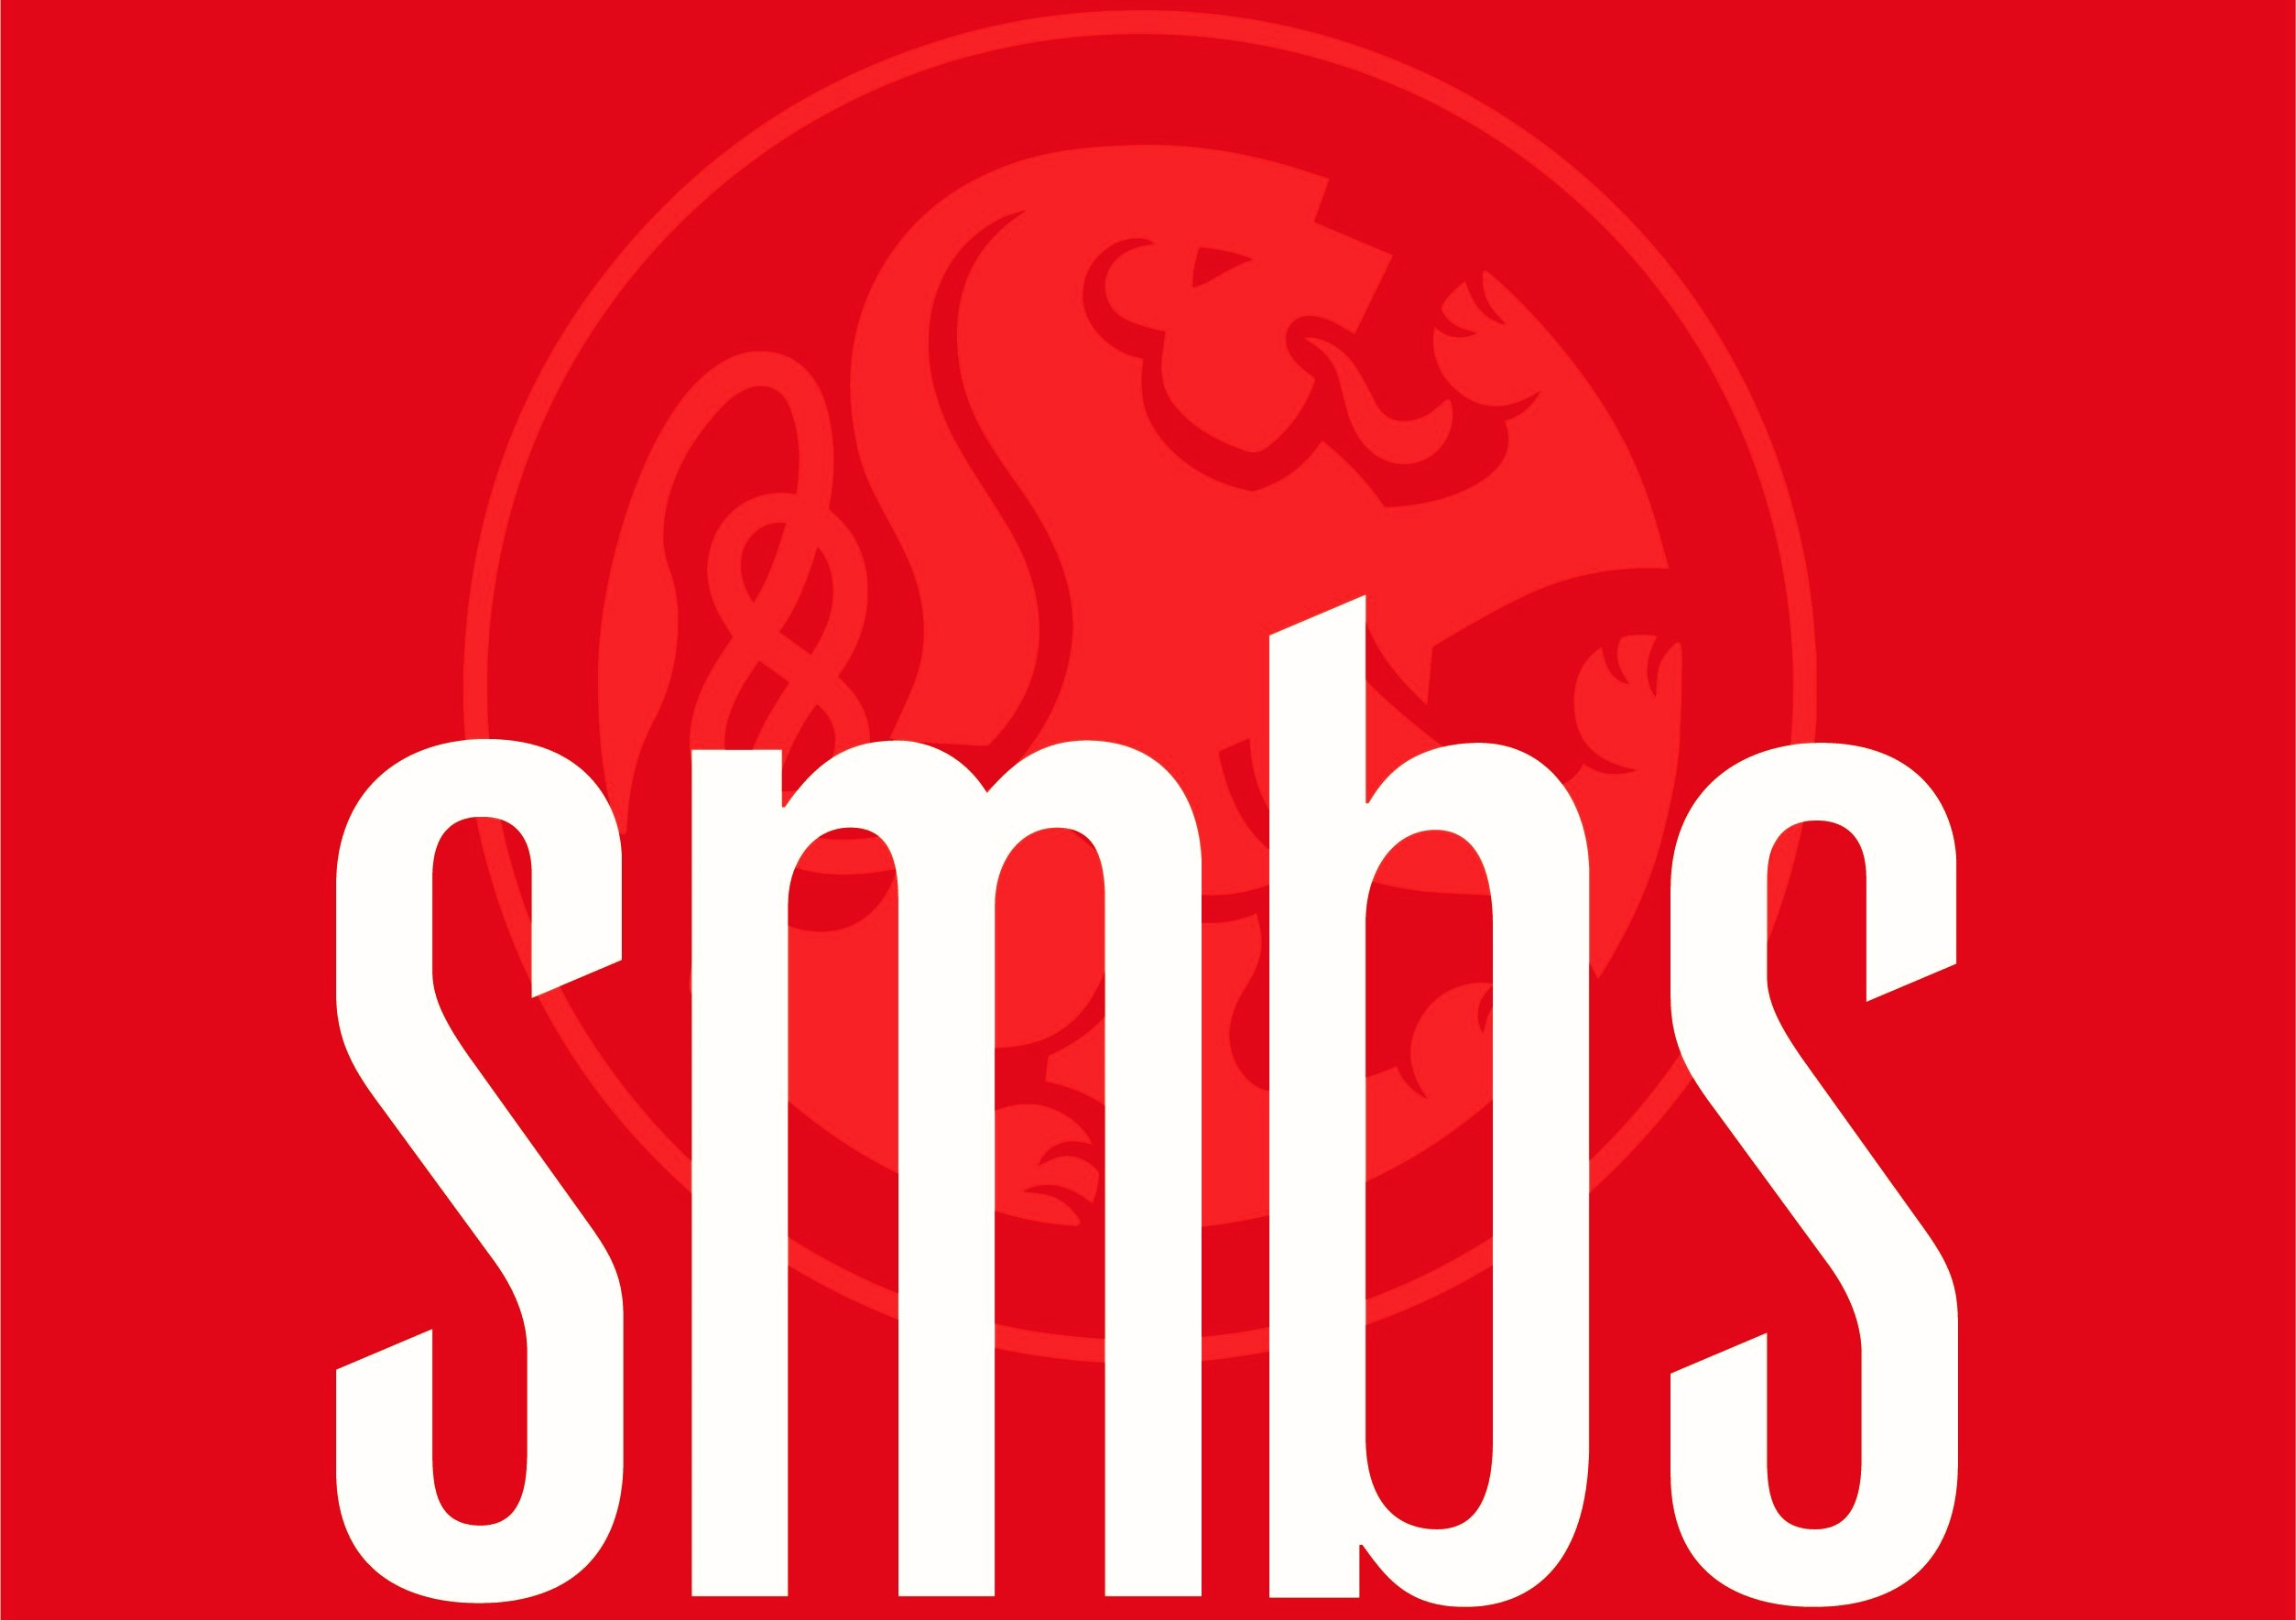 SMBS Mottobild